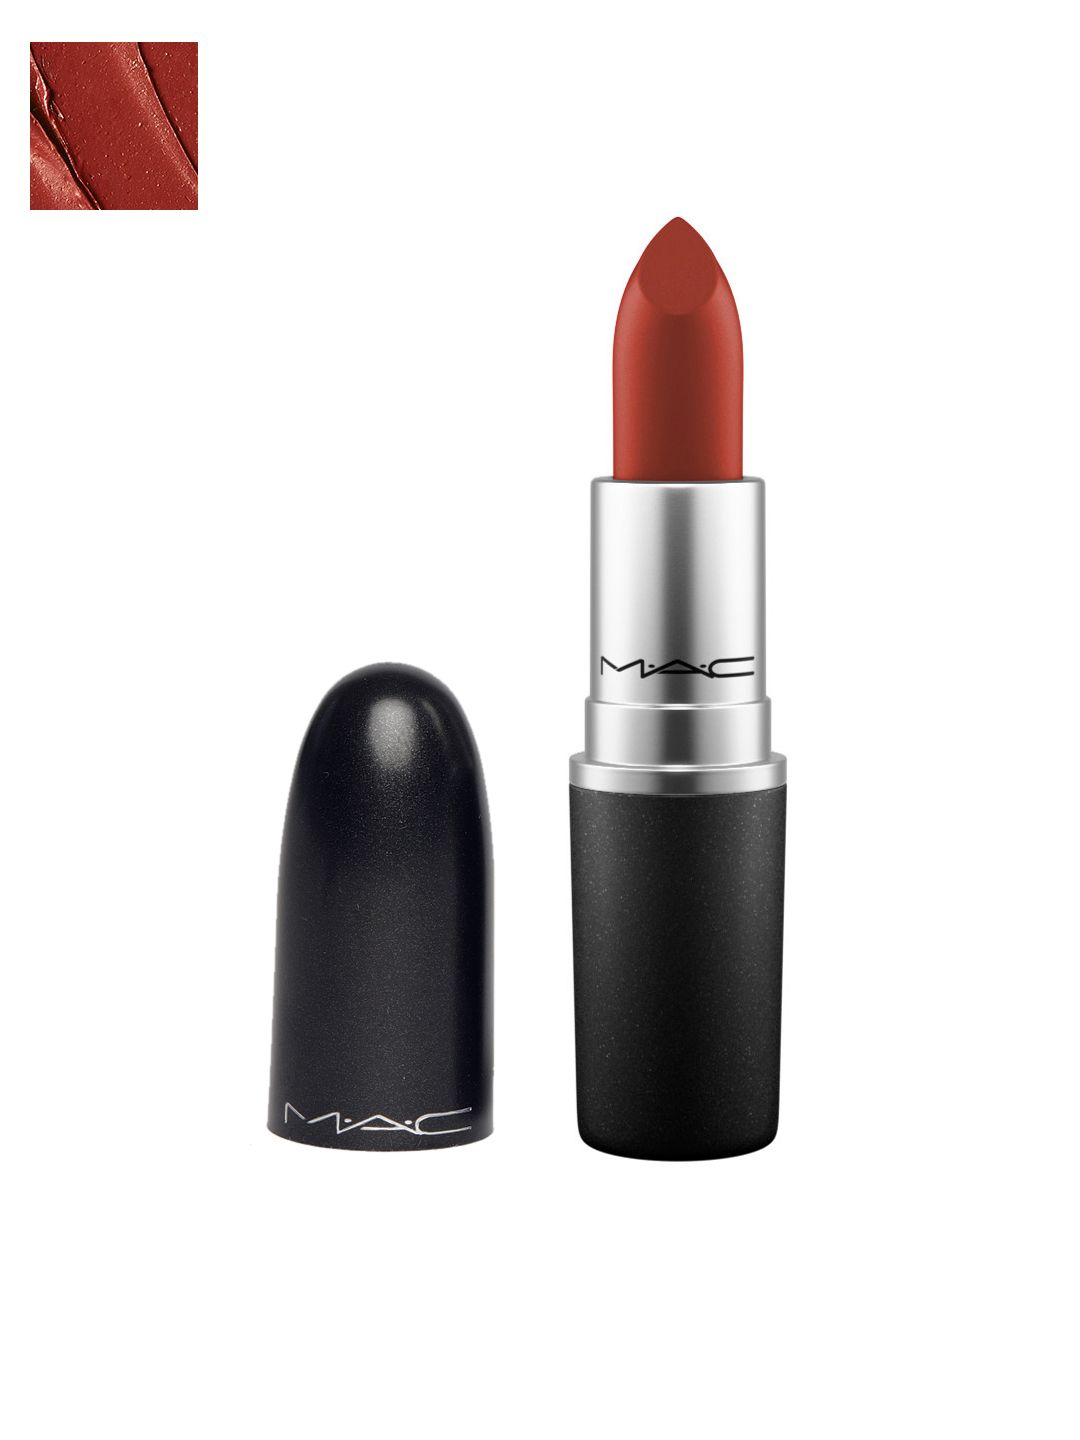 M.A.C Matte Throwbacks Lipstick - Marrakesh 646 3 gm Price in India